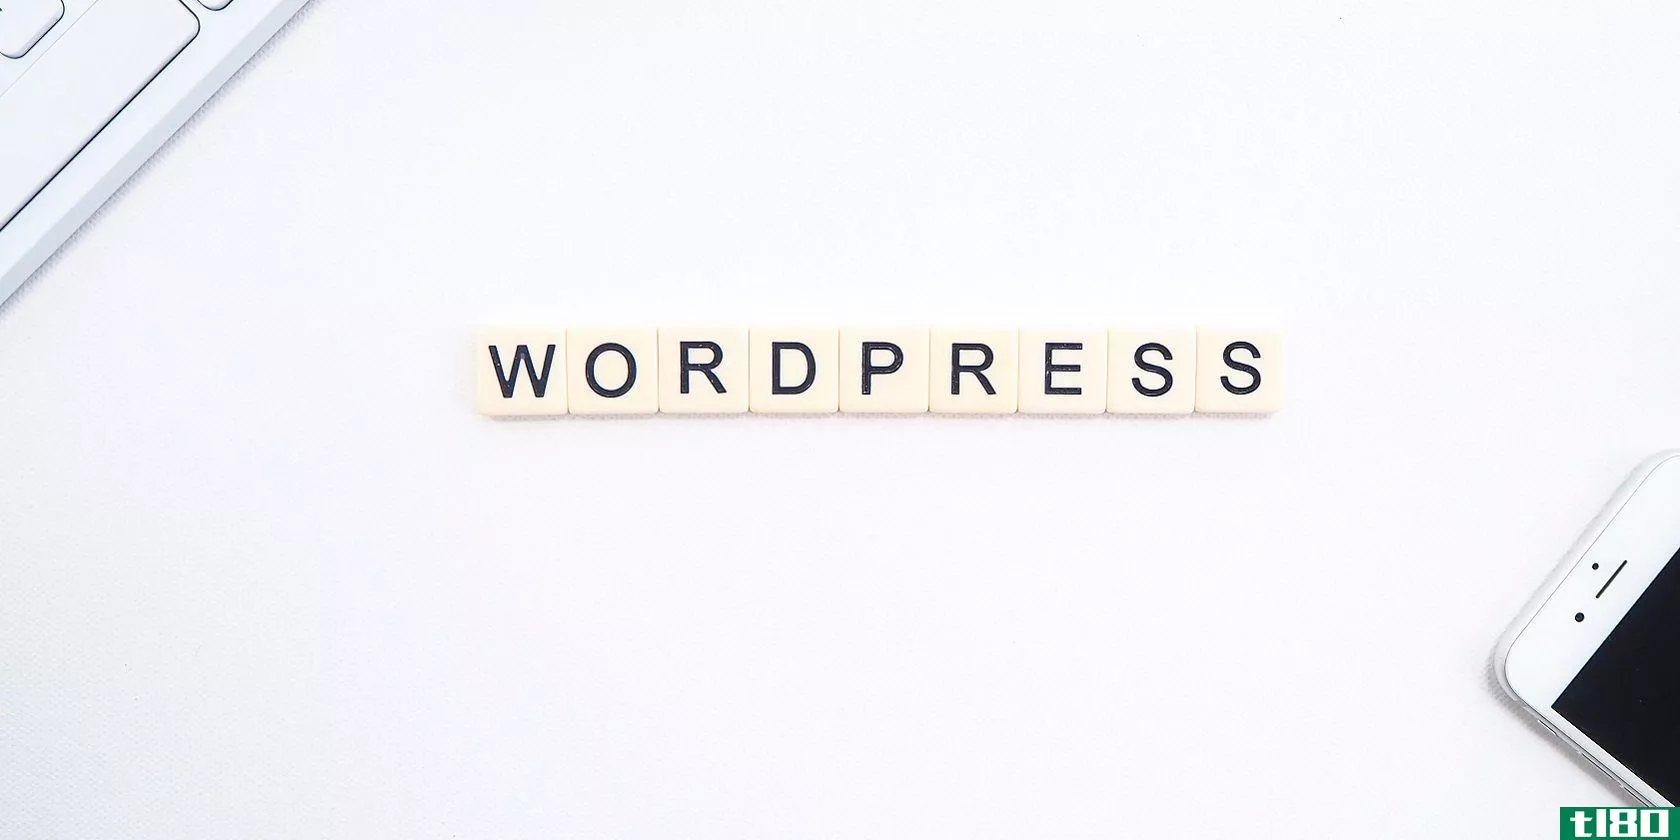 Tiles spelling WordPress